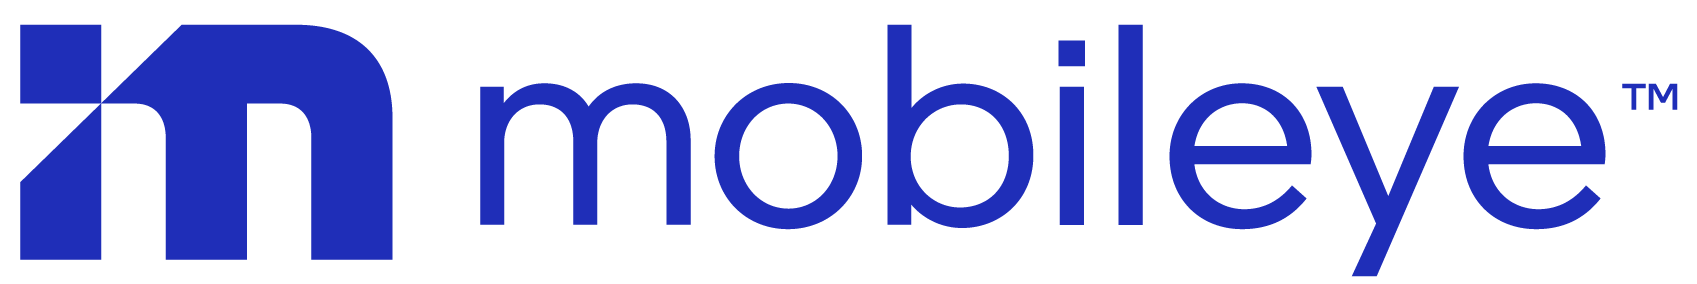 mobileye logo horizontal color rgb - Sécurité